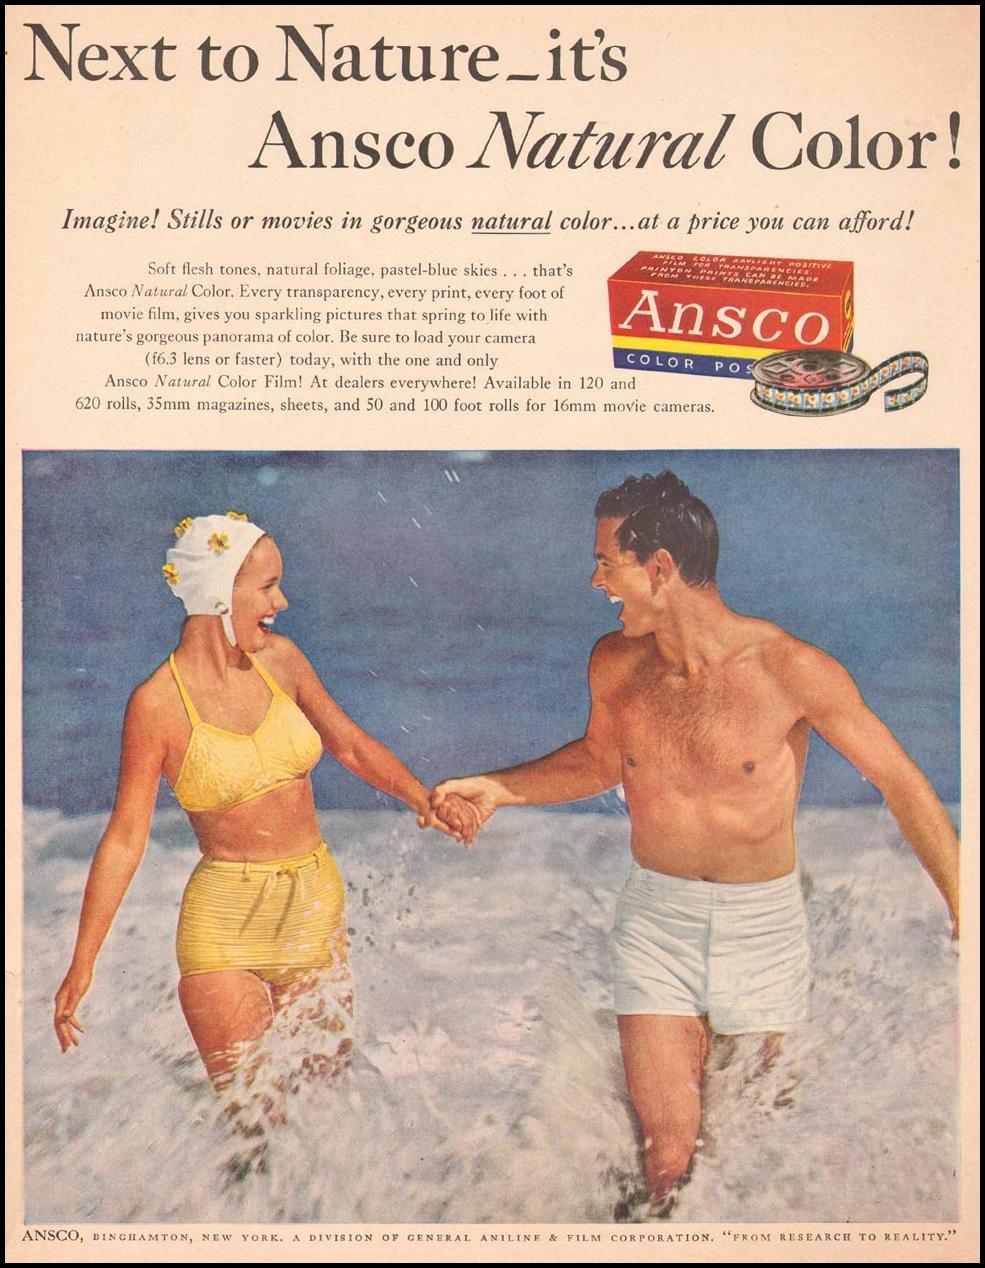 ANSCO COLOR FILM
LIFE
07/02/1951
p. 58